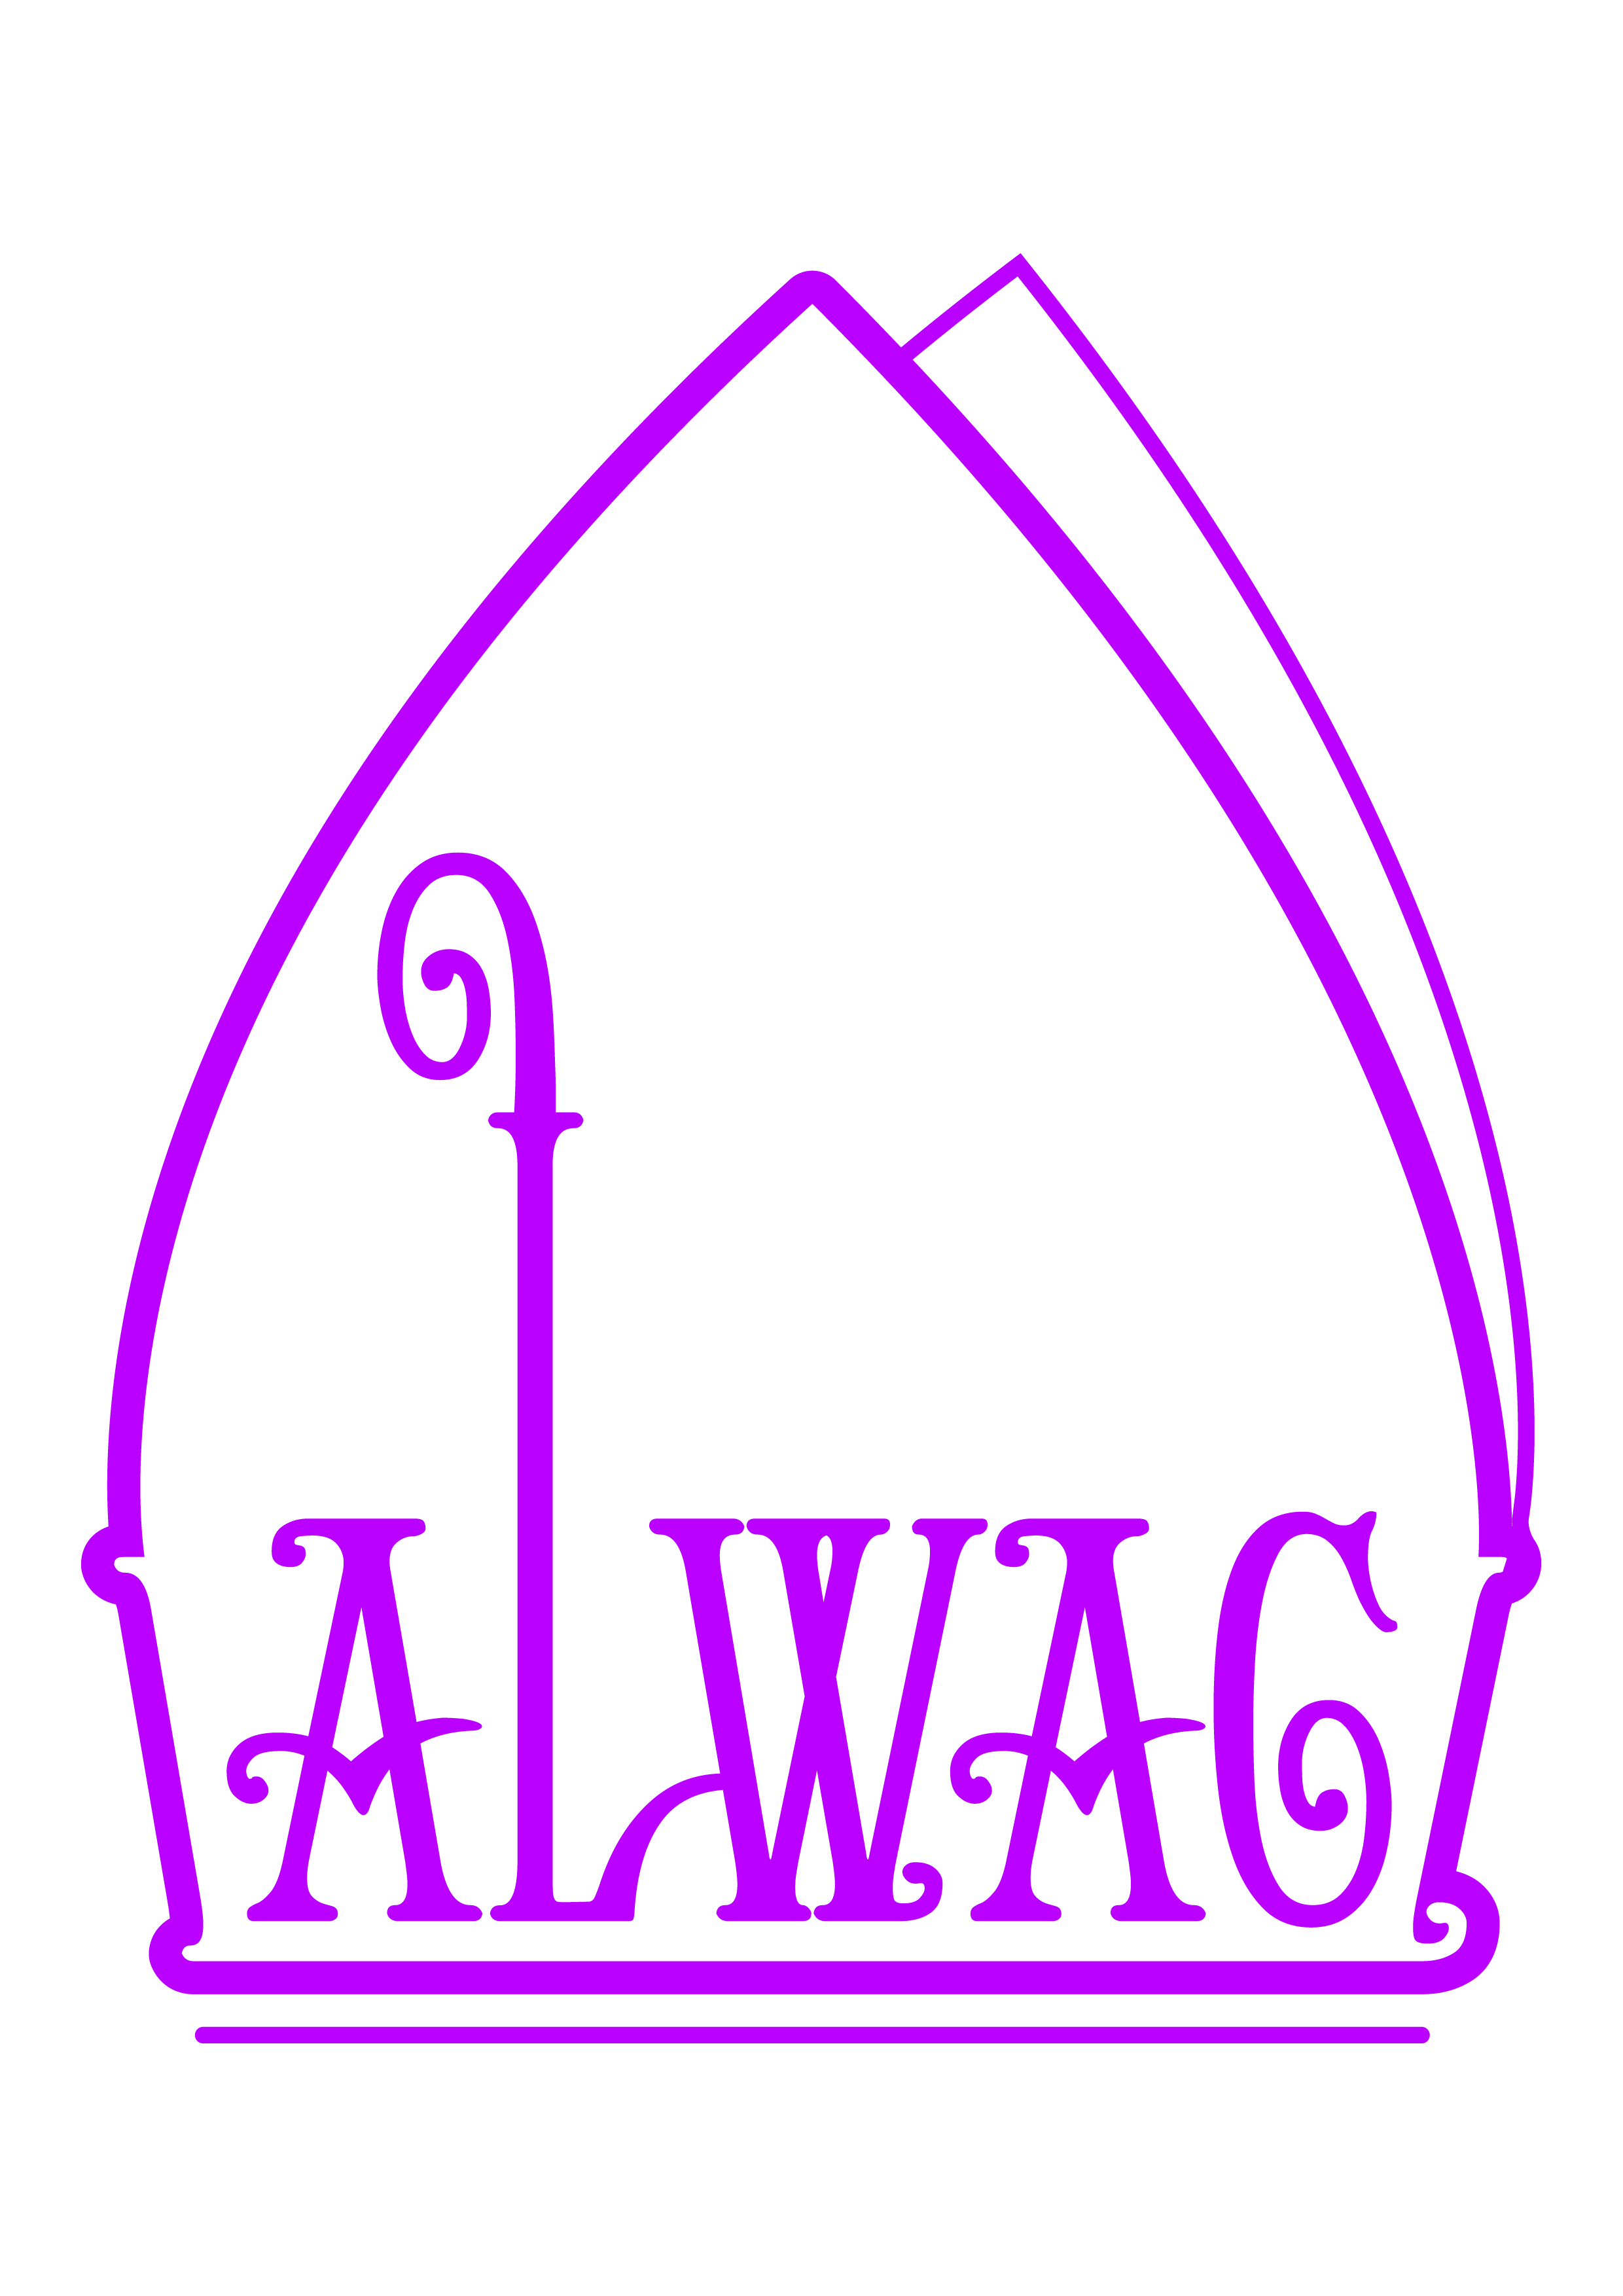 Alwac Logo designed by Robert Brooks